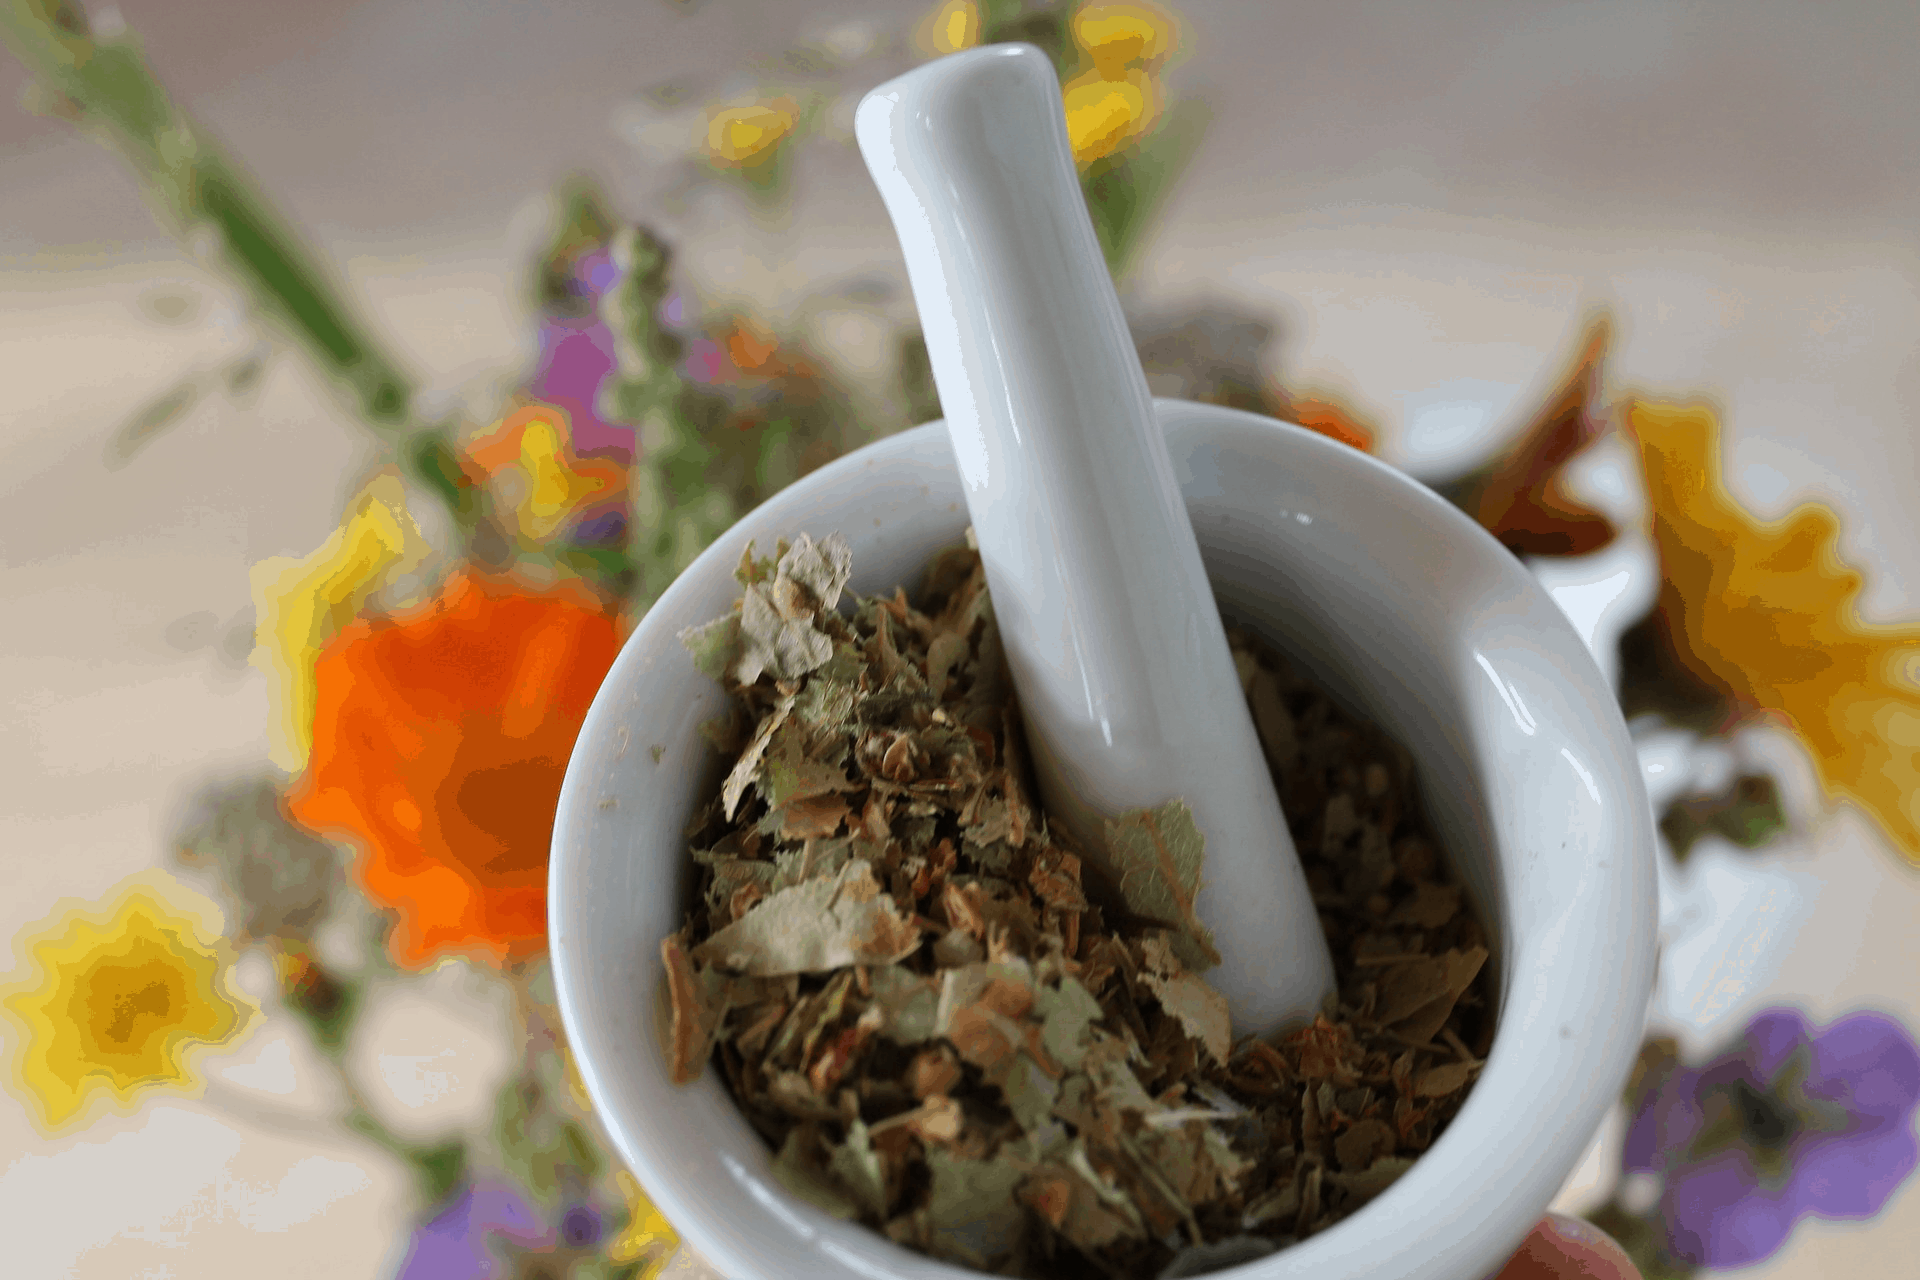 Loose leaf tea for bath and body